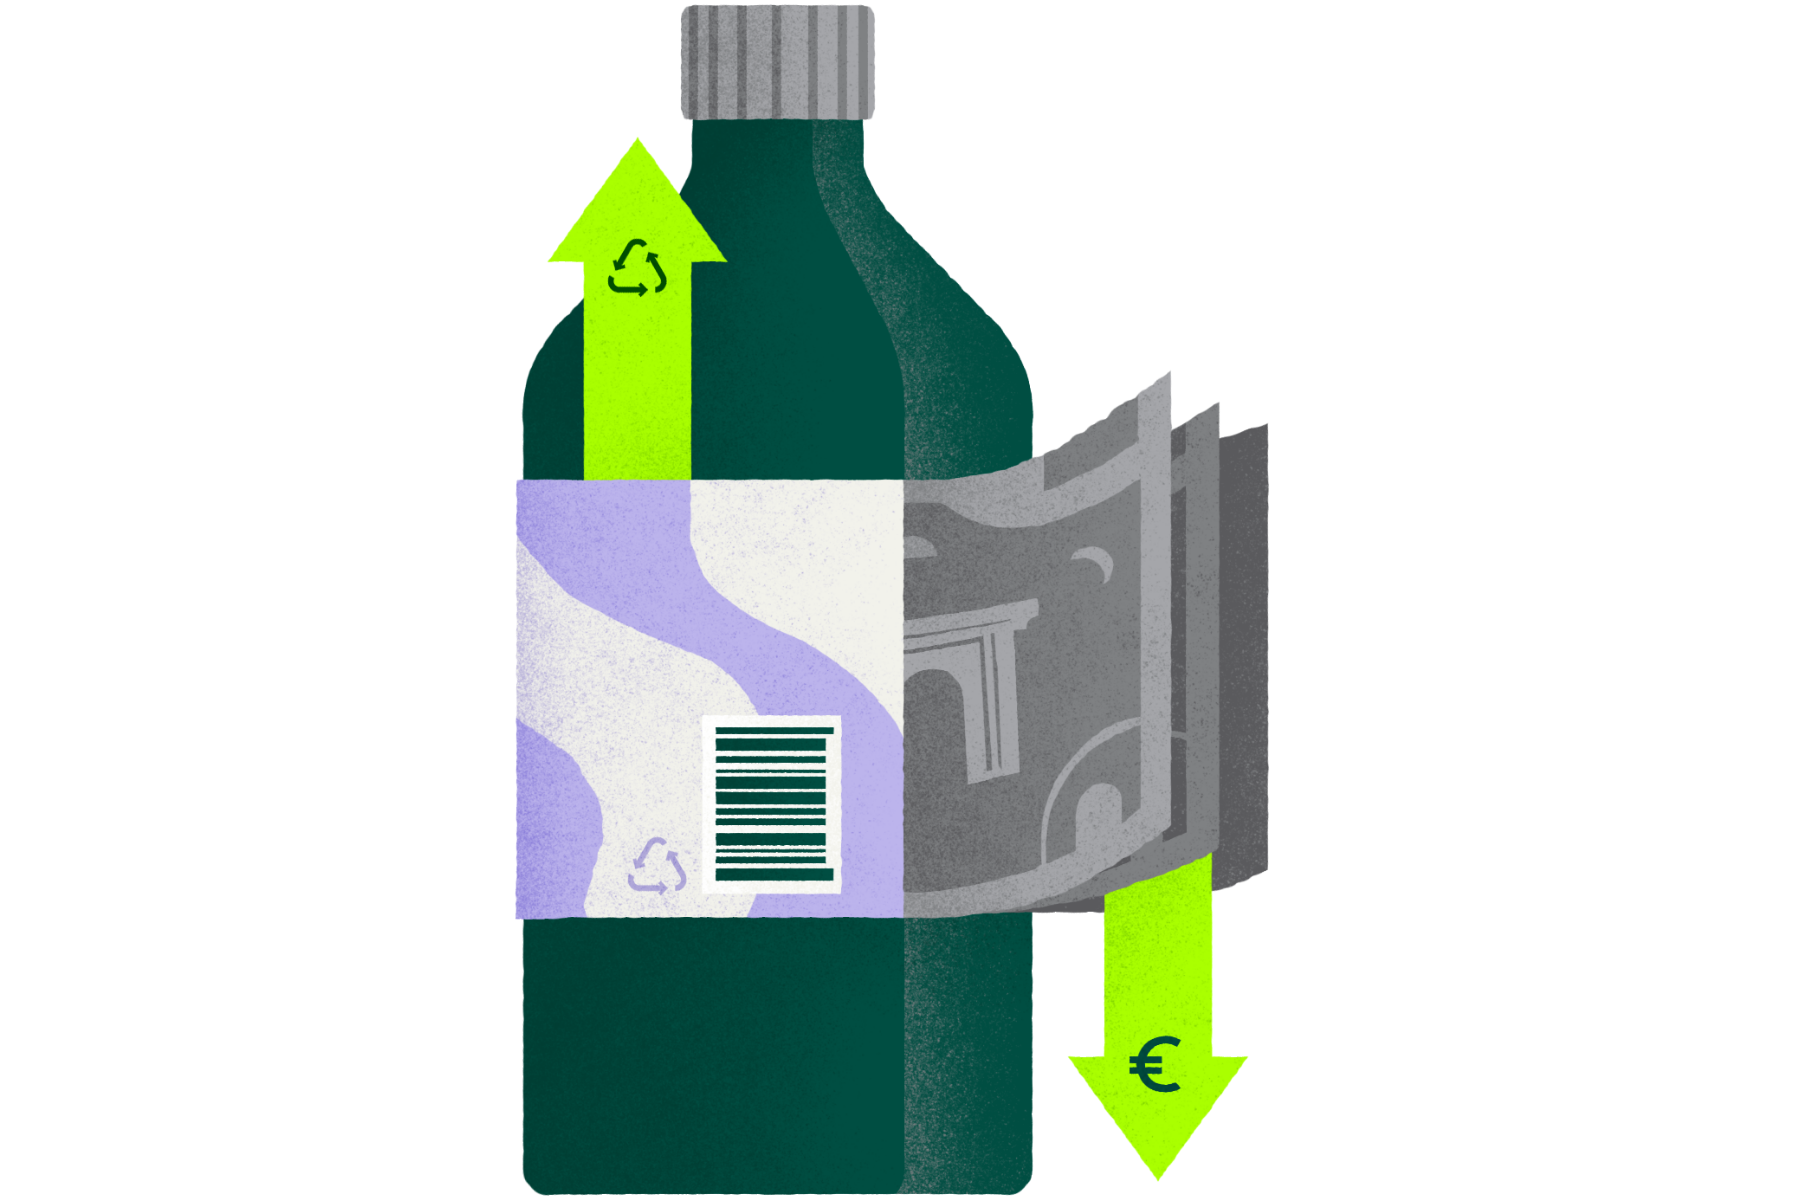 Packaging and packaging waste regulation